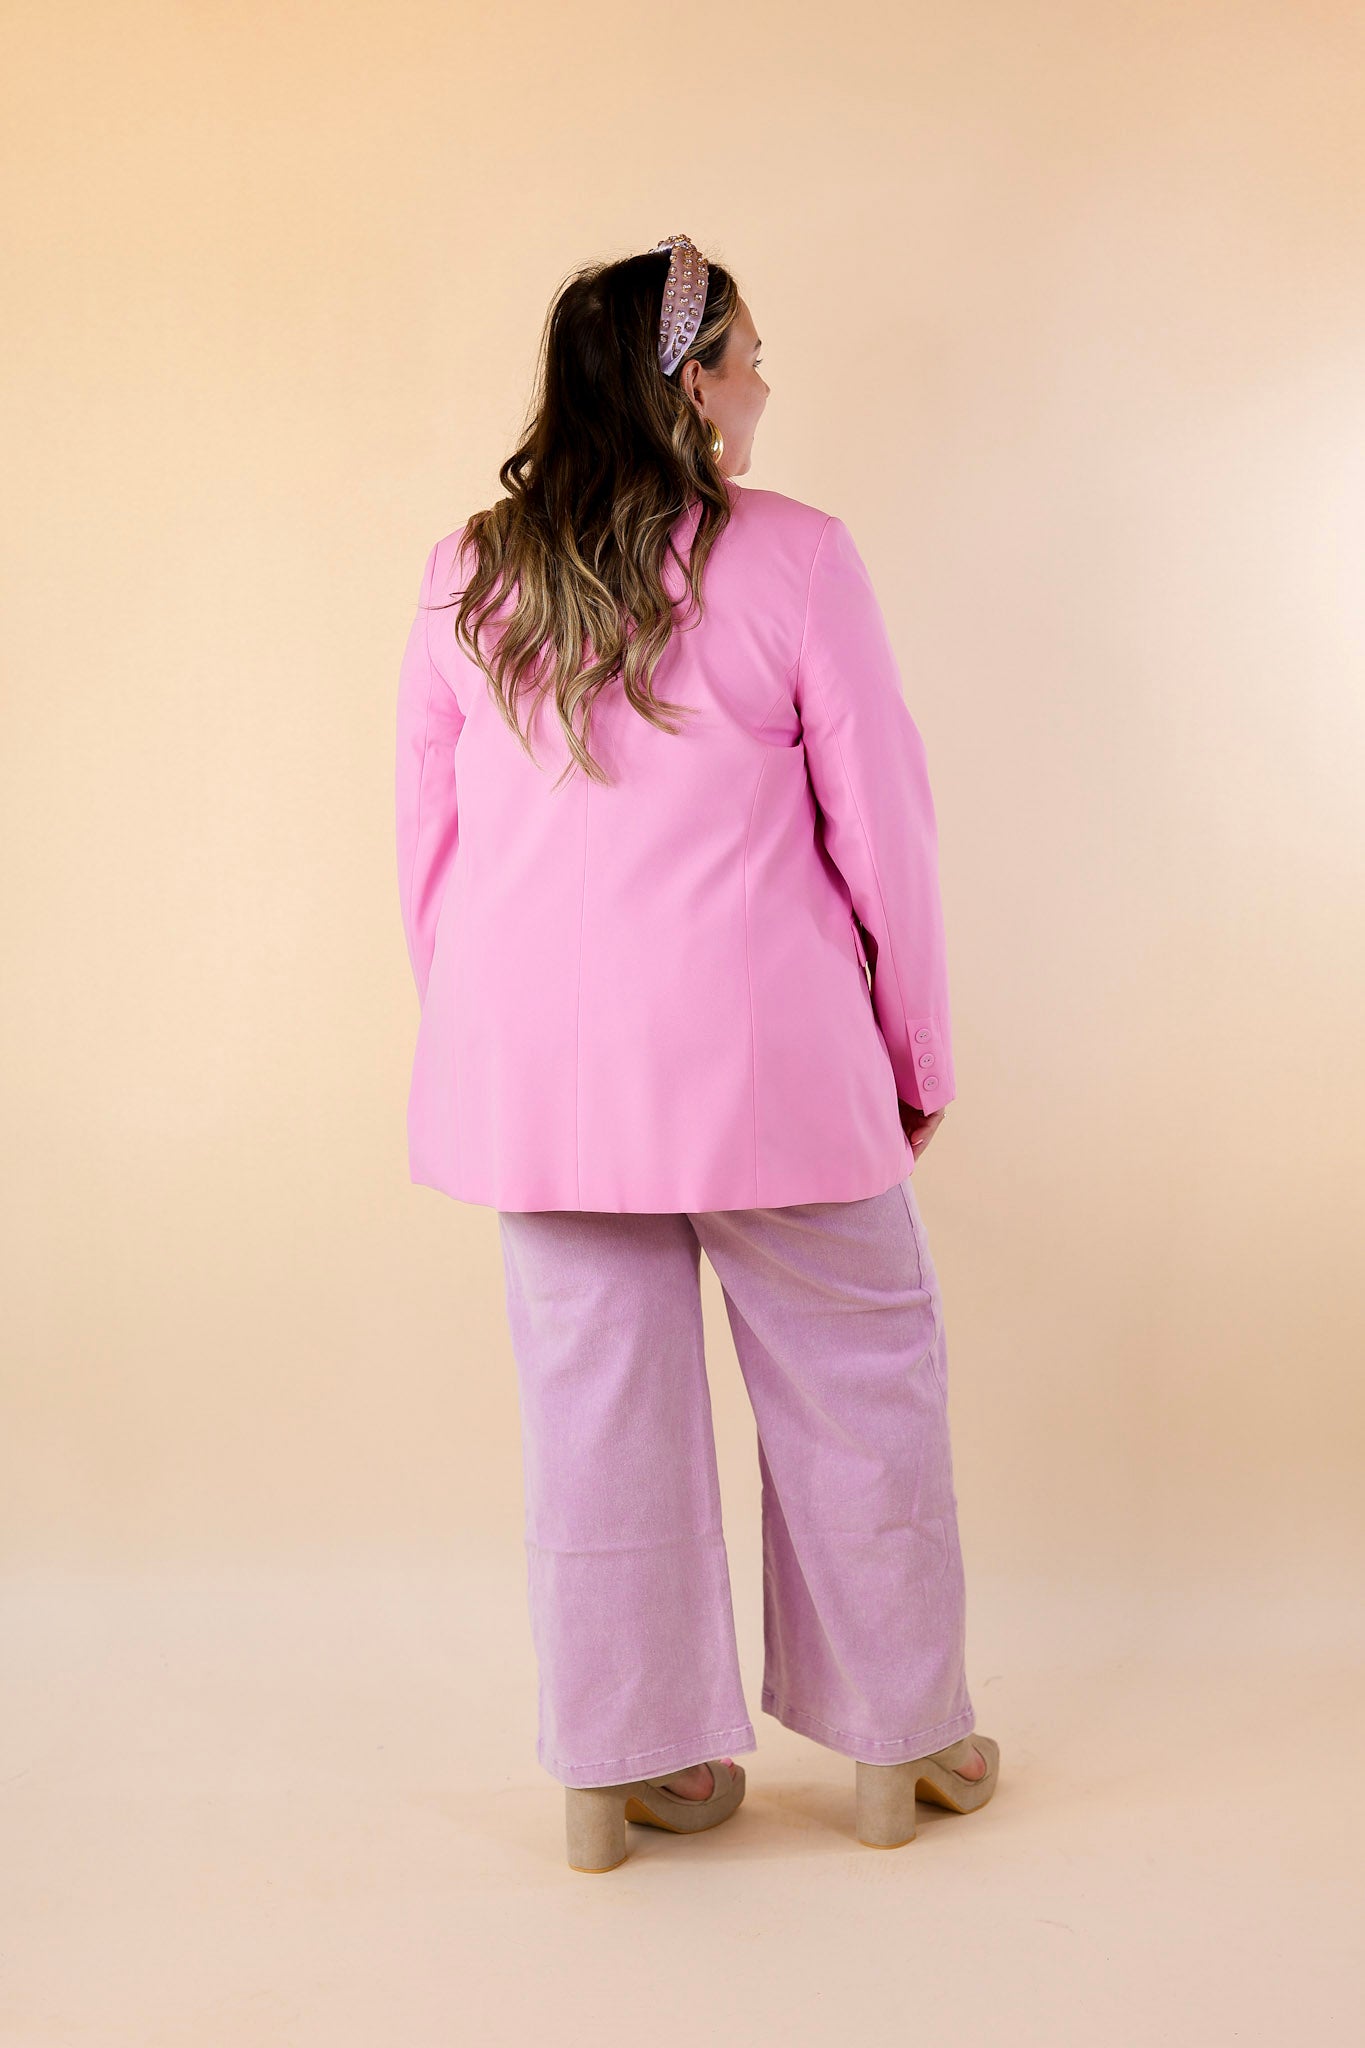 Emily McCarthy | Bristol Blazer in Bon Bon (Pink) - Giddy Up Glamour Boutique